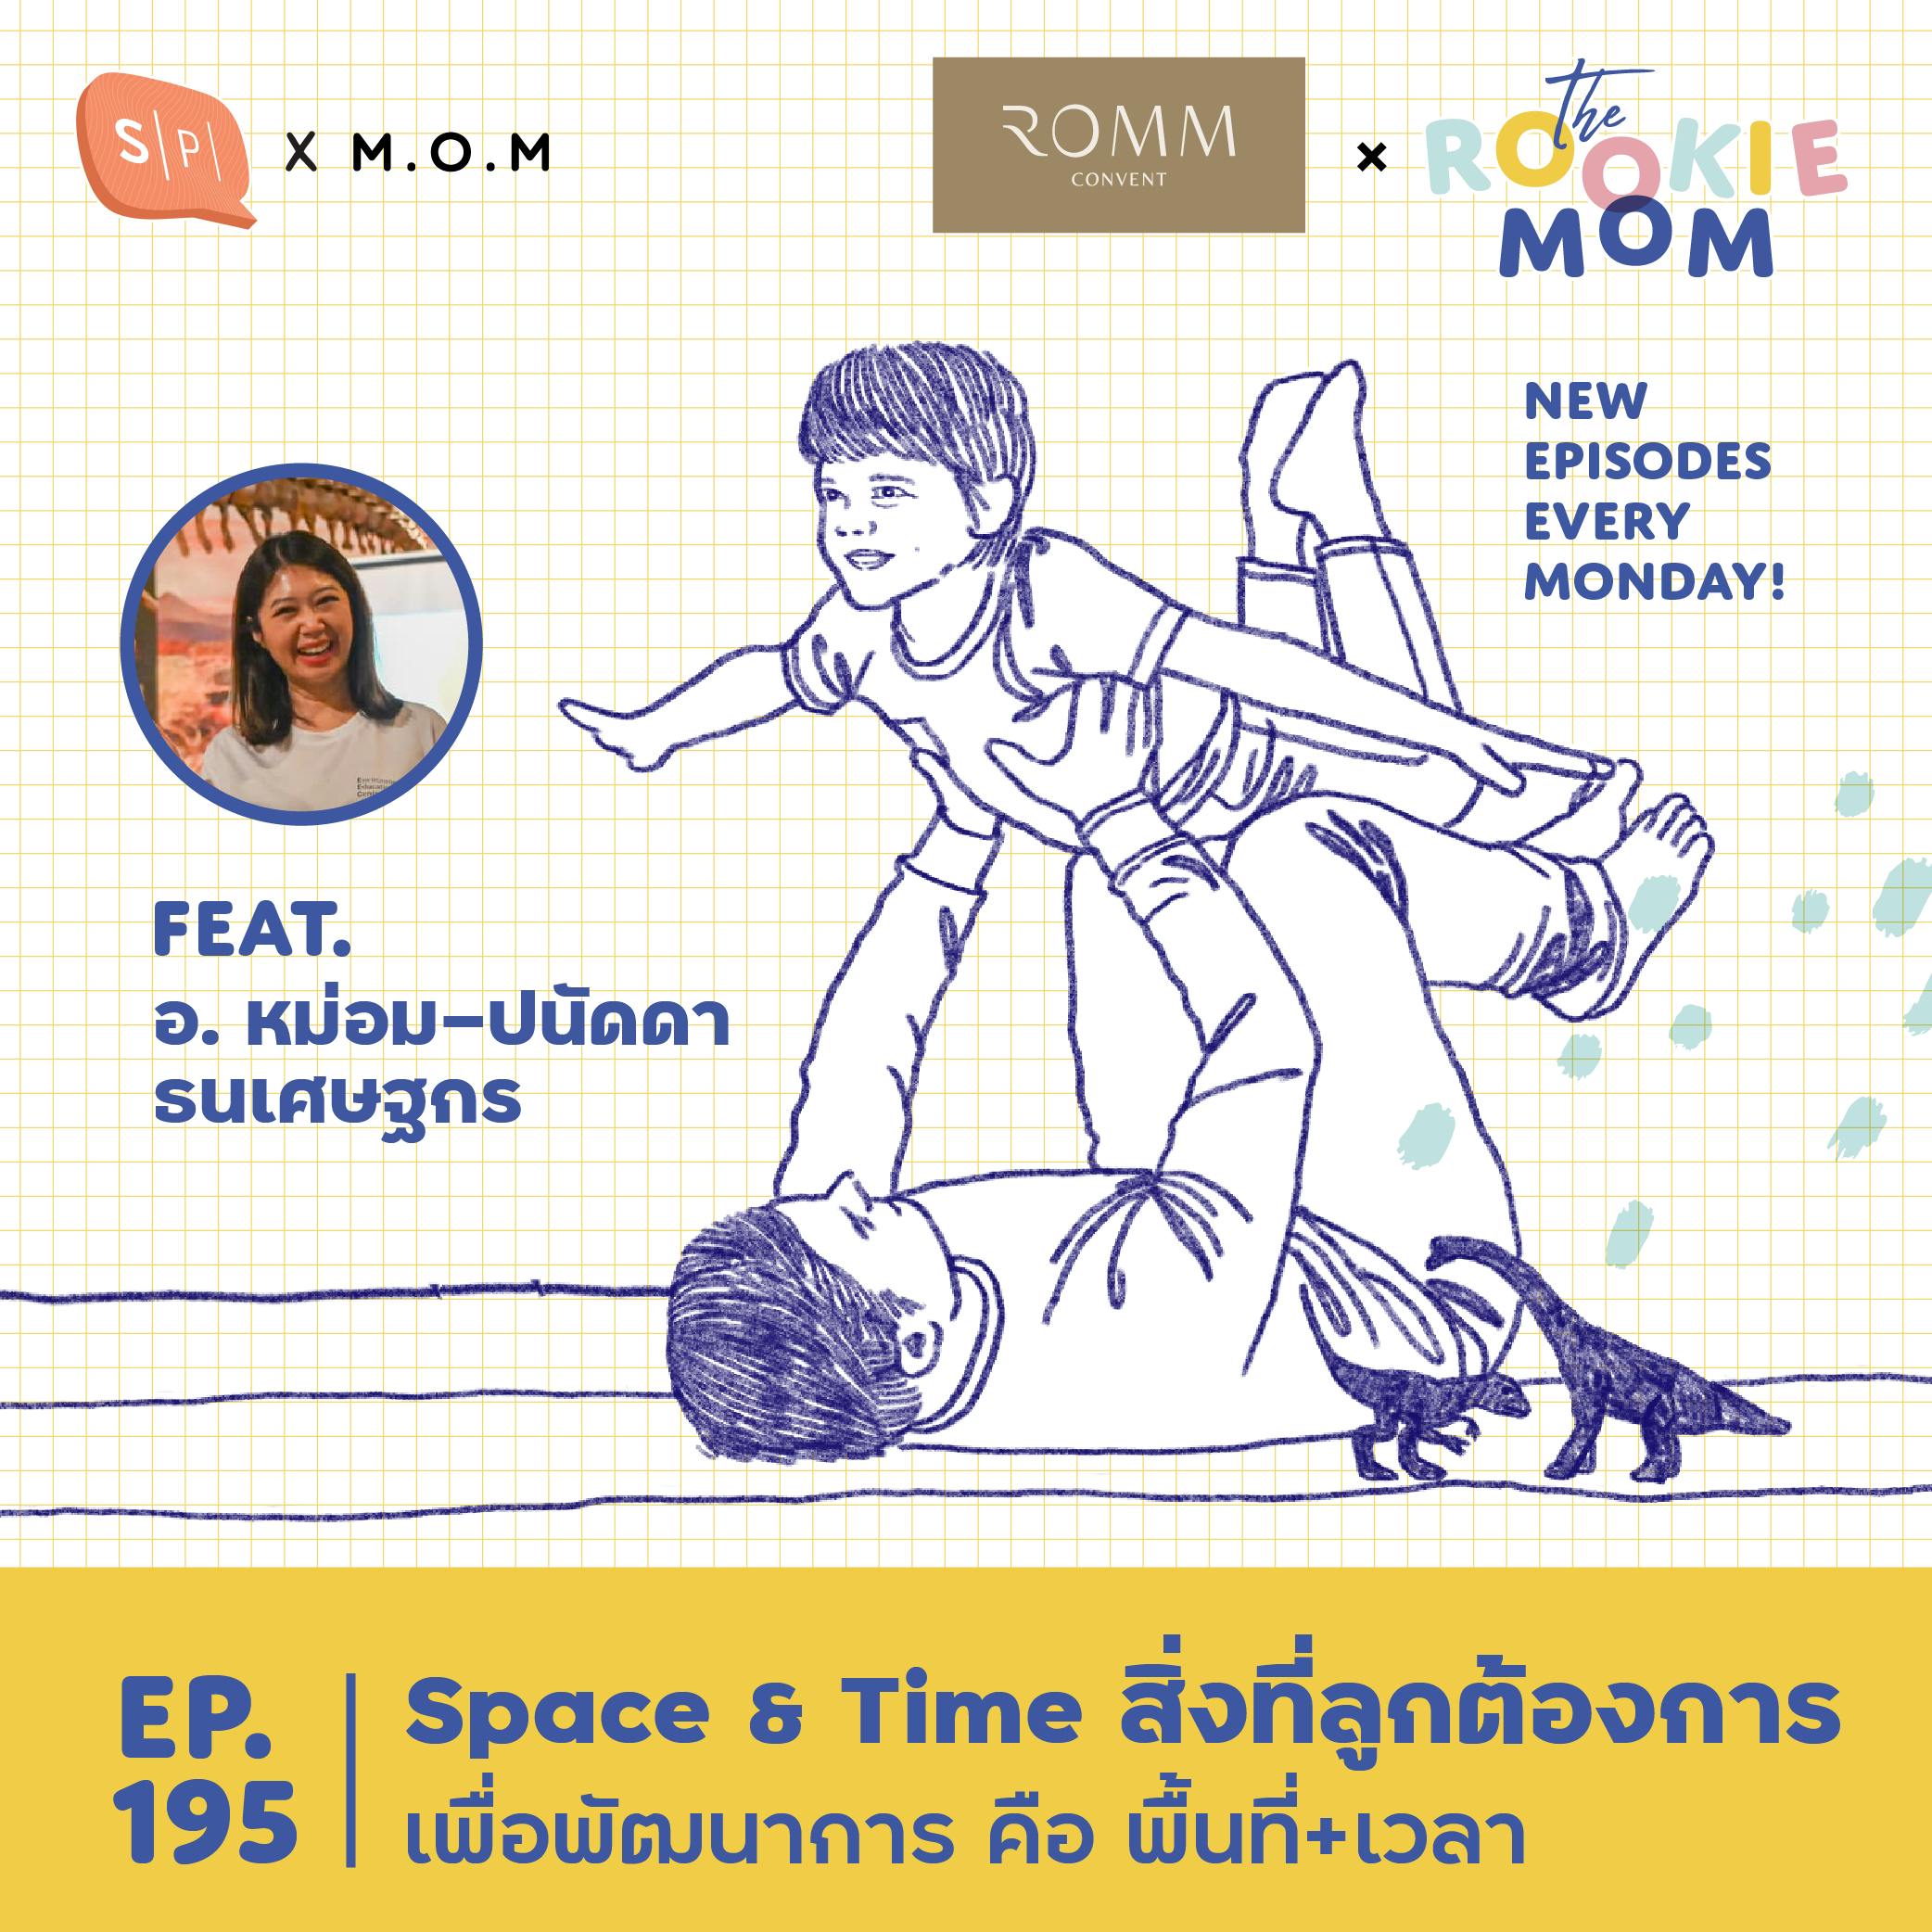 Space & Time สิ่งที่ลูกต้องการเพื่อพัฒนาการ คือ พื้นที่+เวลา | The Rookie Mom EP195